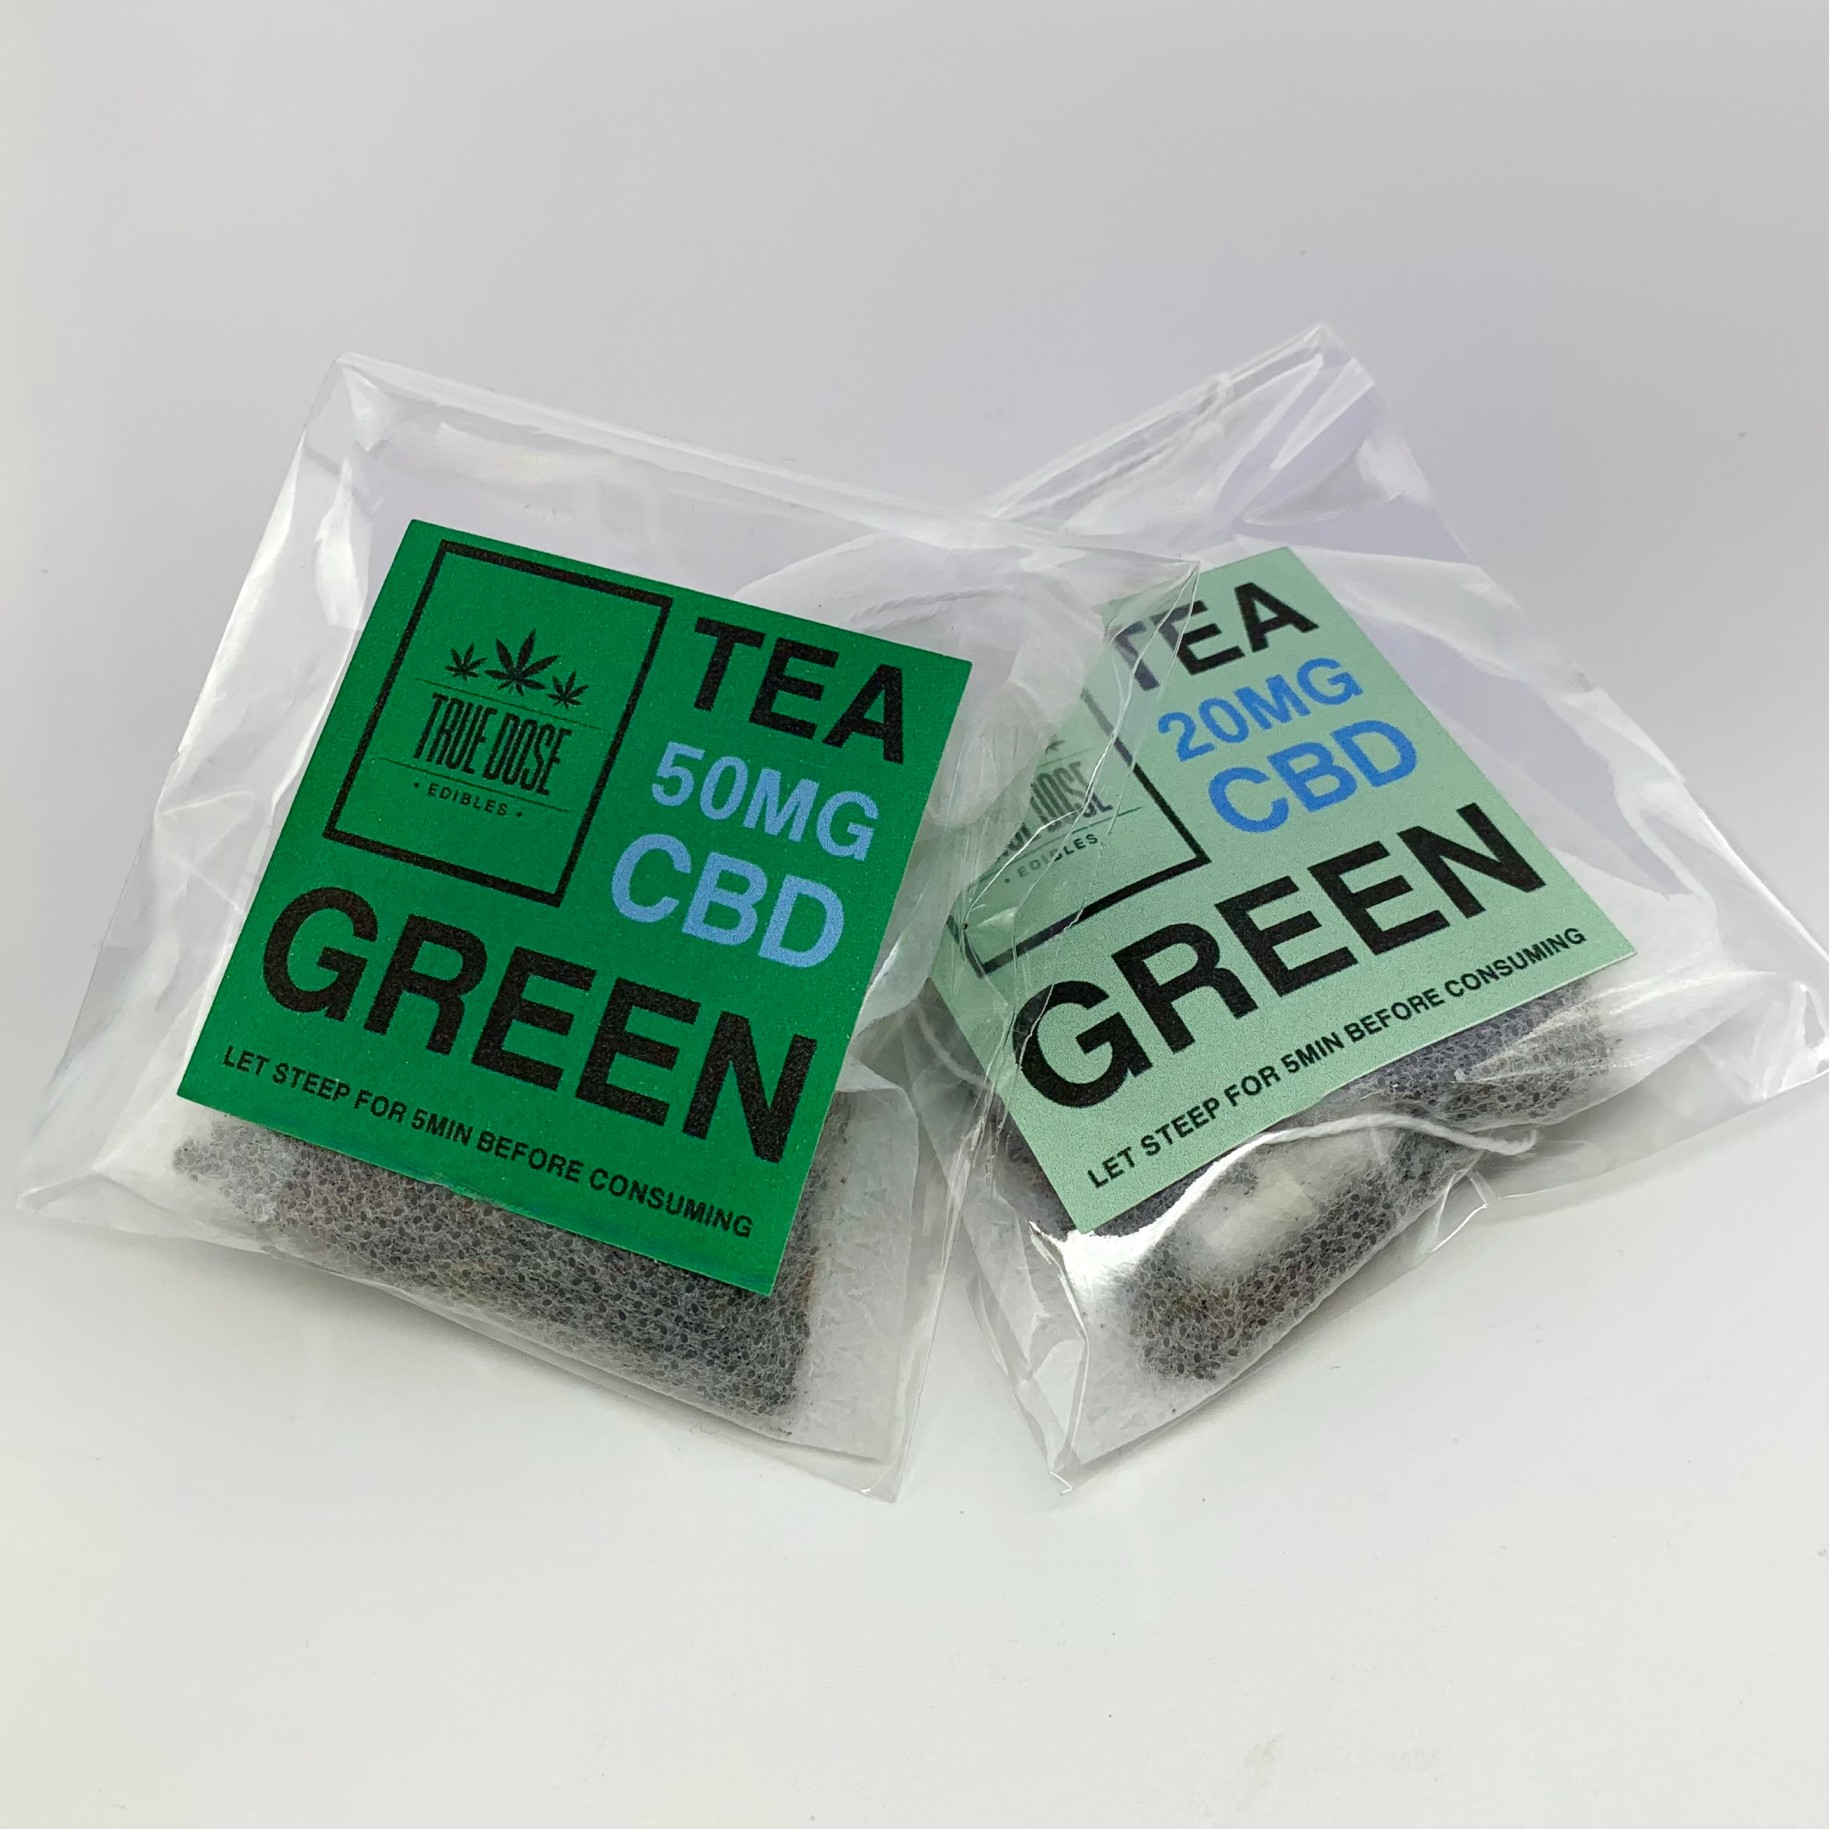 Green Tea : CBD